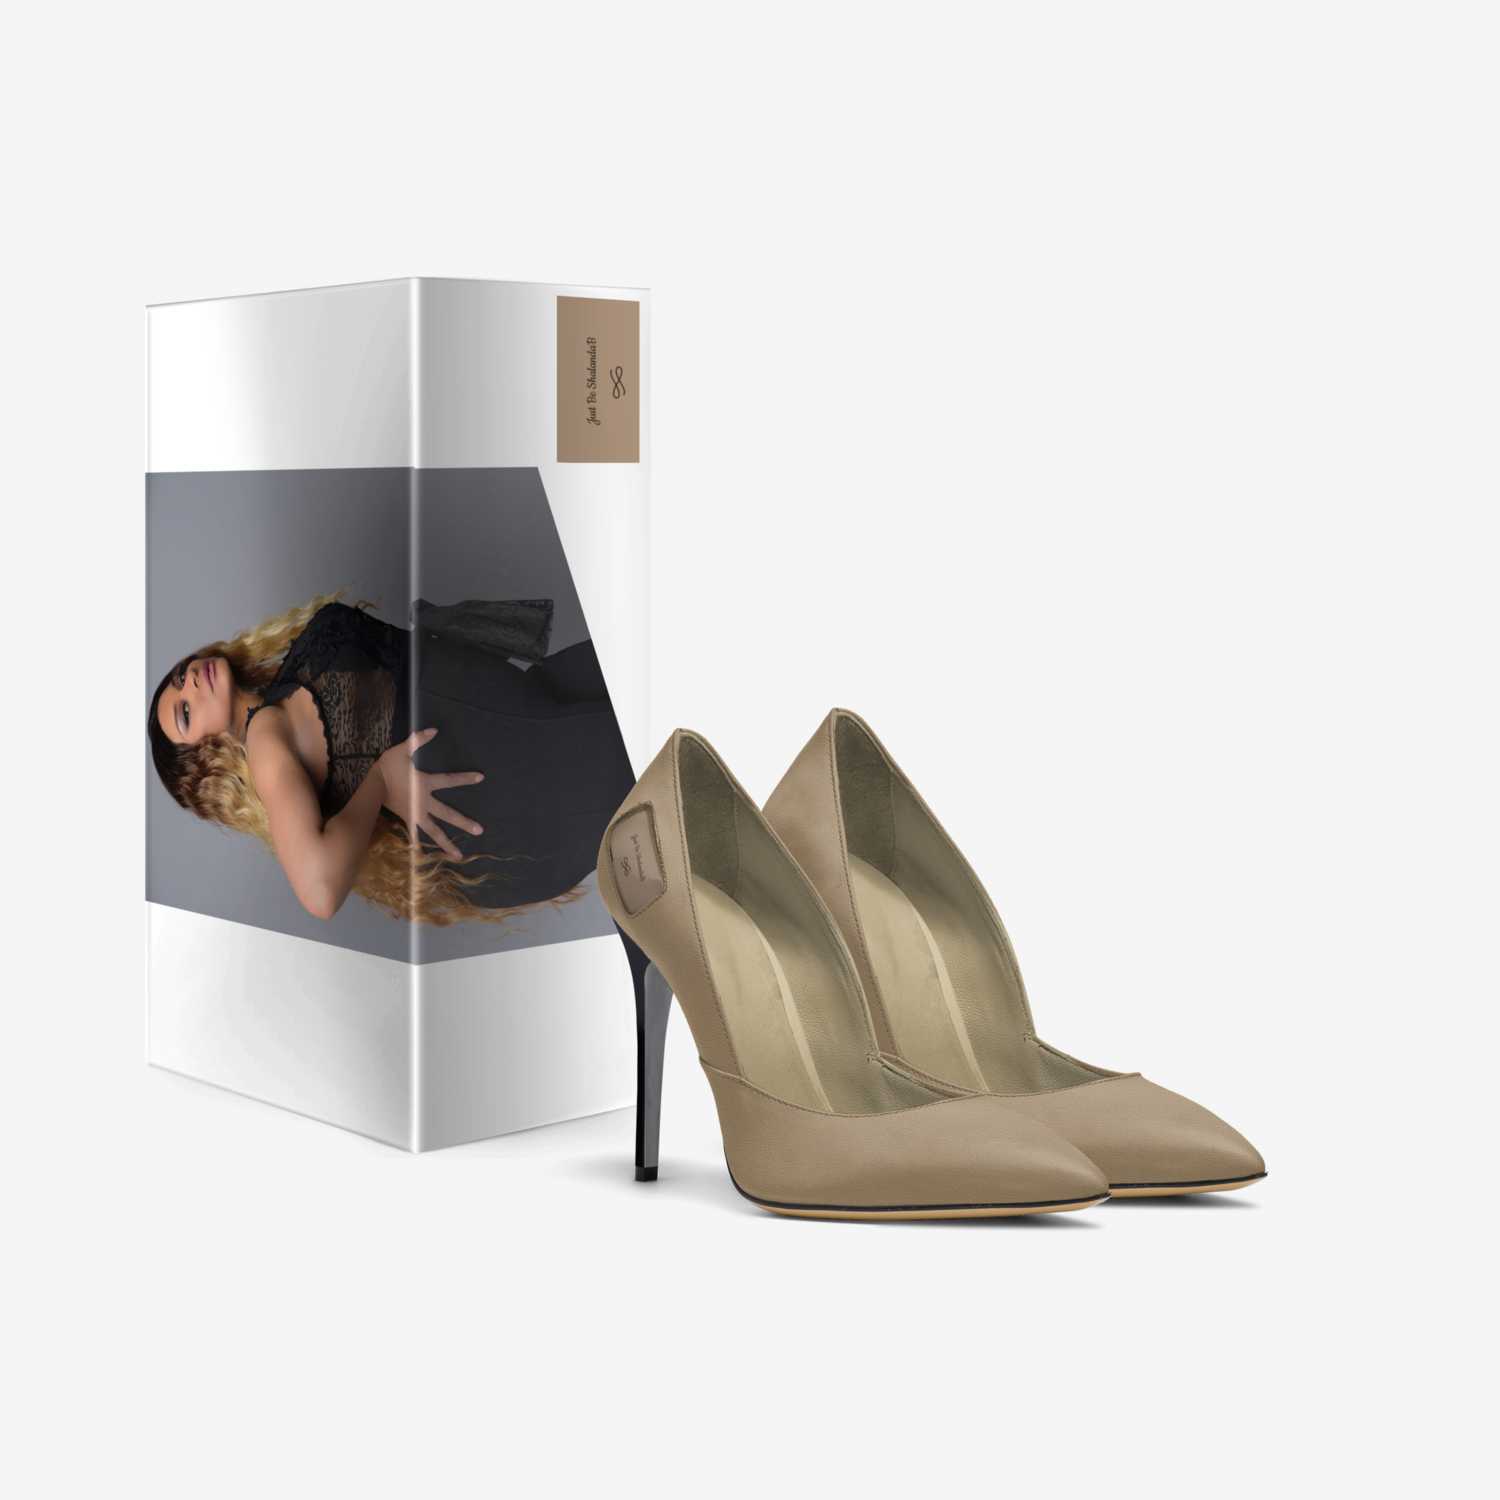 Just Be ShalandaB custom made in Italy shoes by Shalanda Boyce | Box view